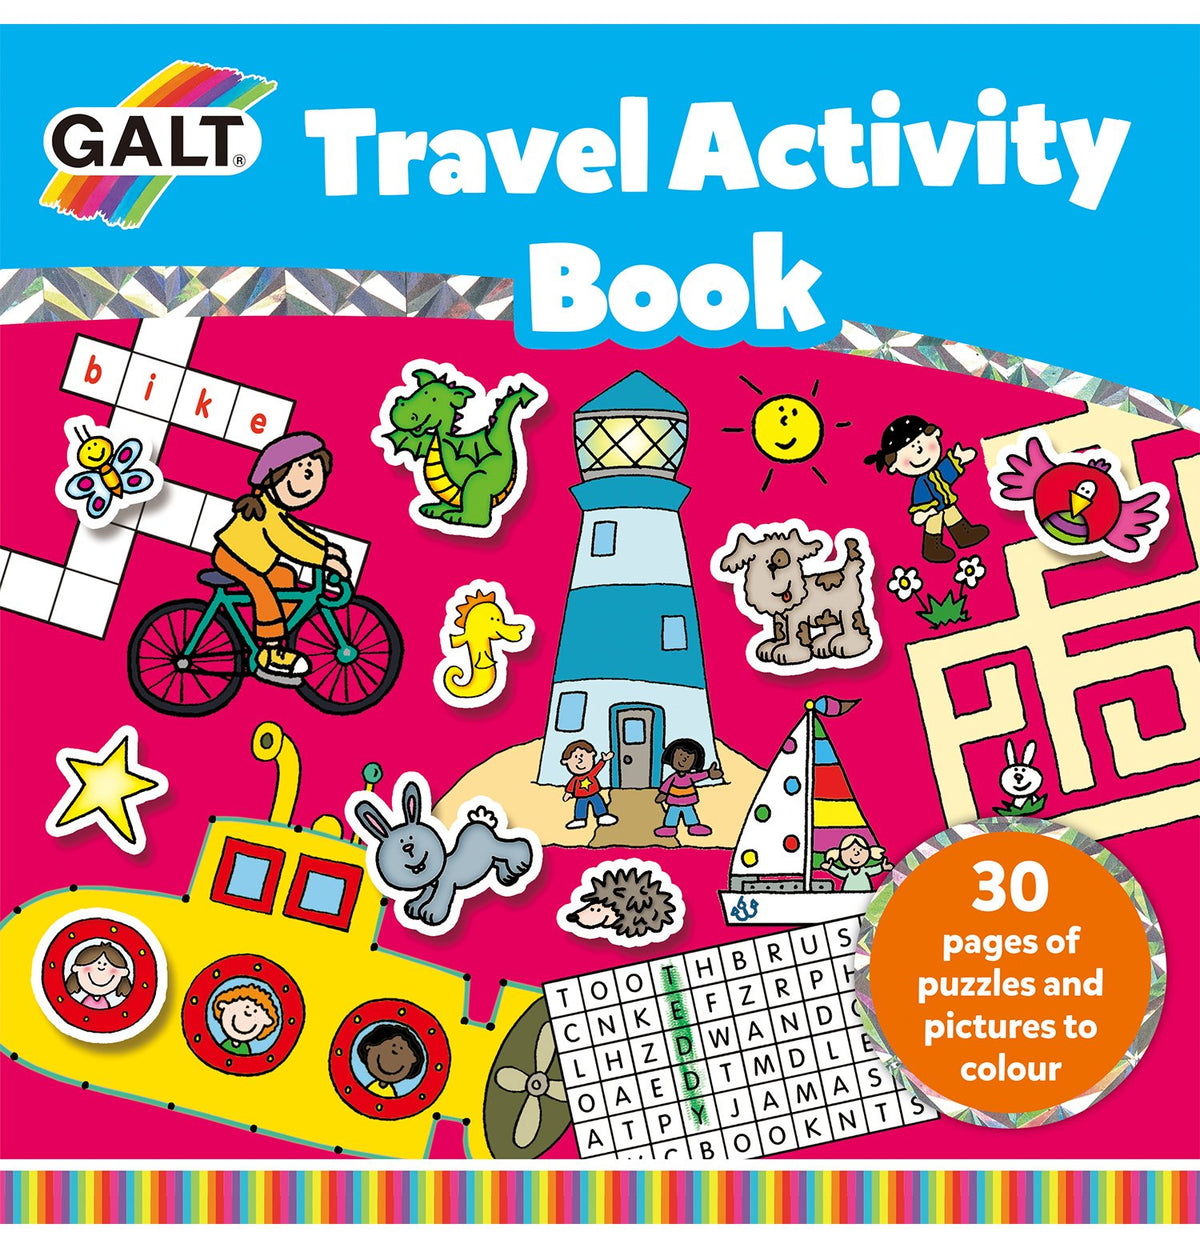 Travel Activity Book - Galt